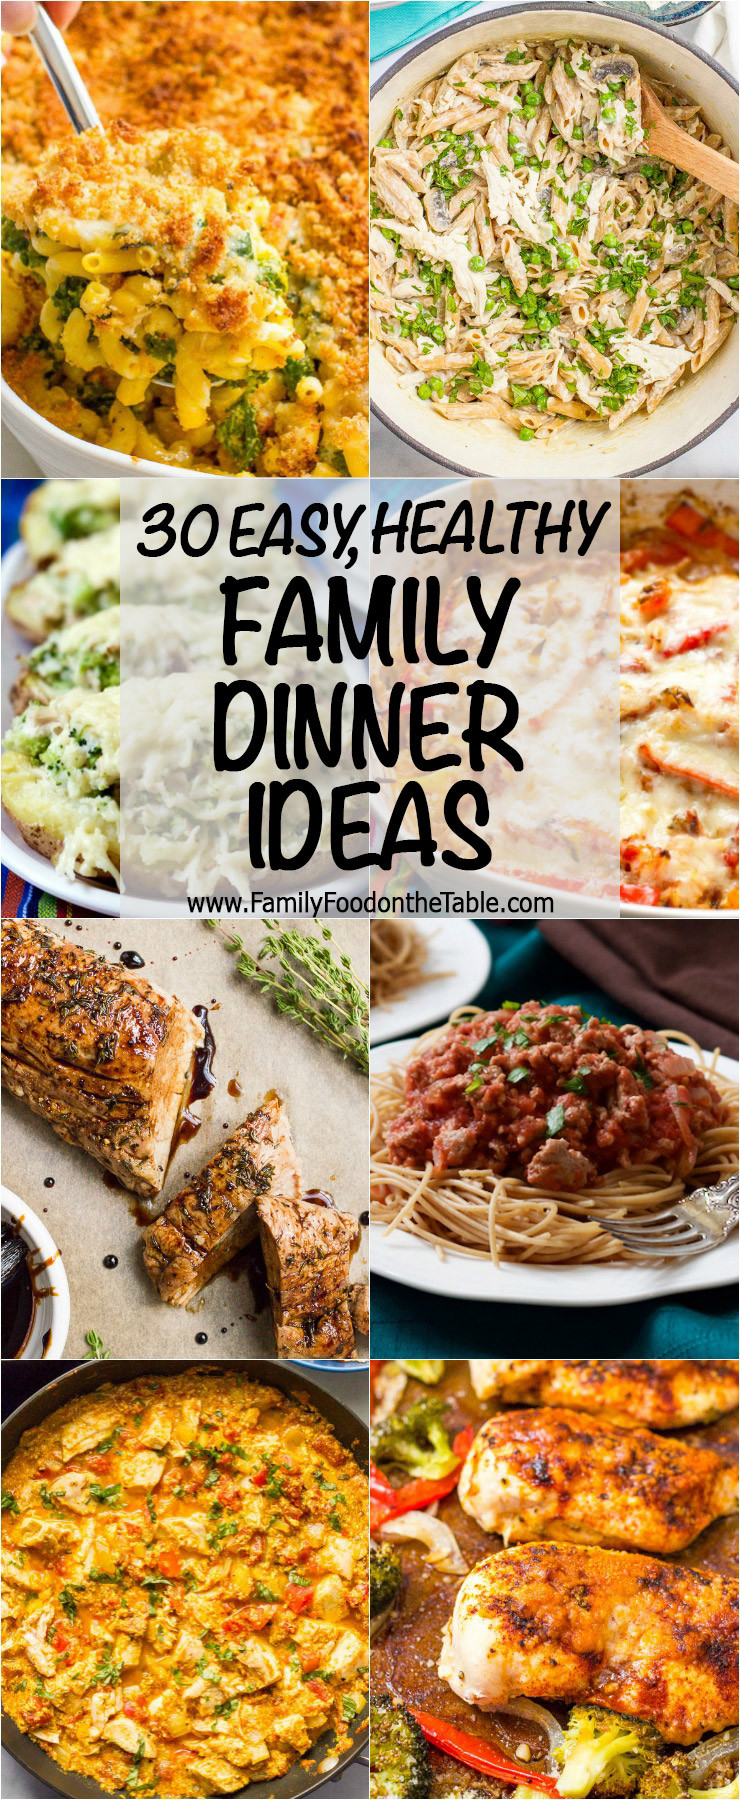 Easy Healthy Family Dinners
 30 easy healthy family dinner ideas Family Food on the Table